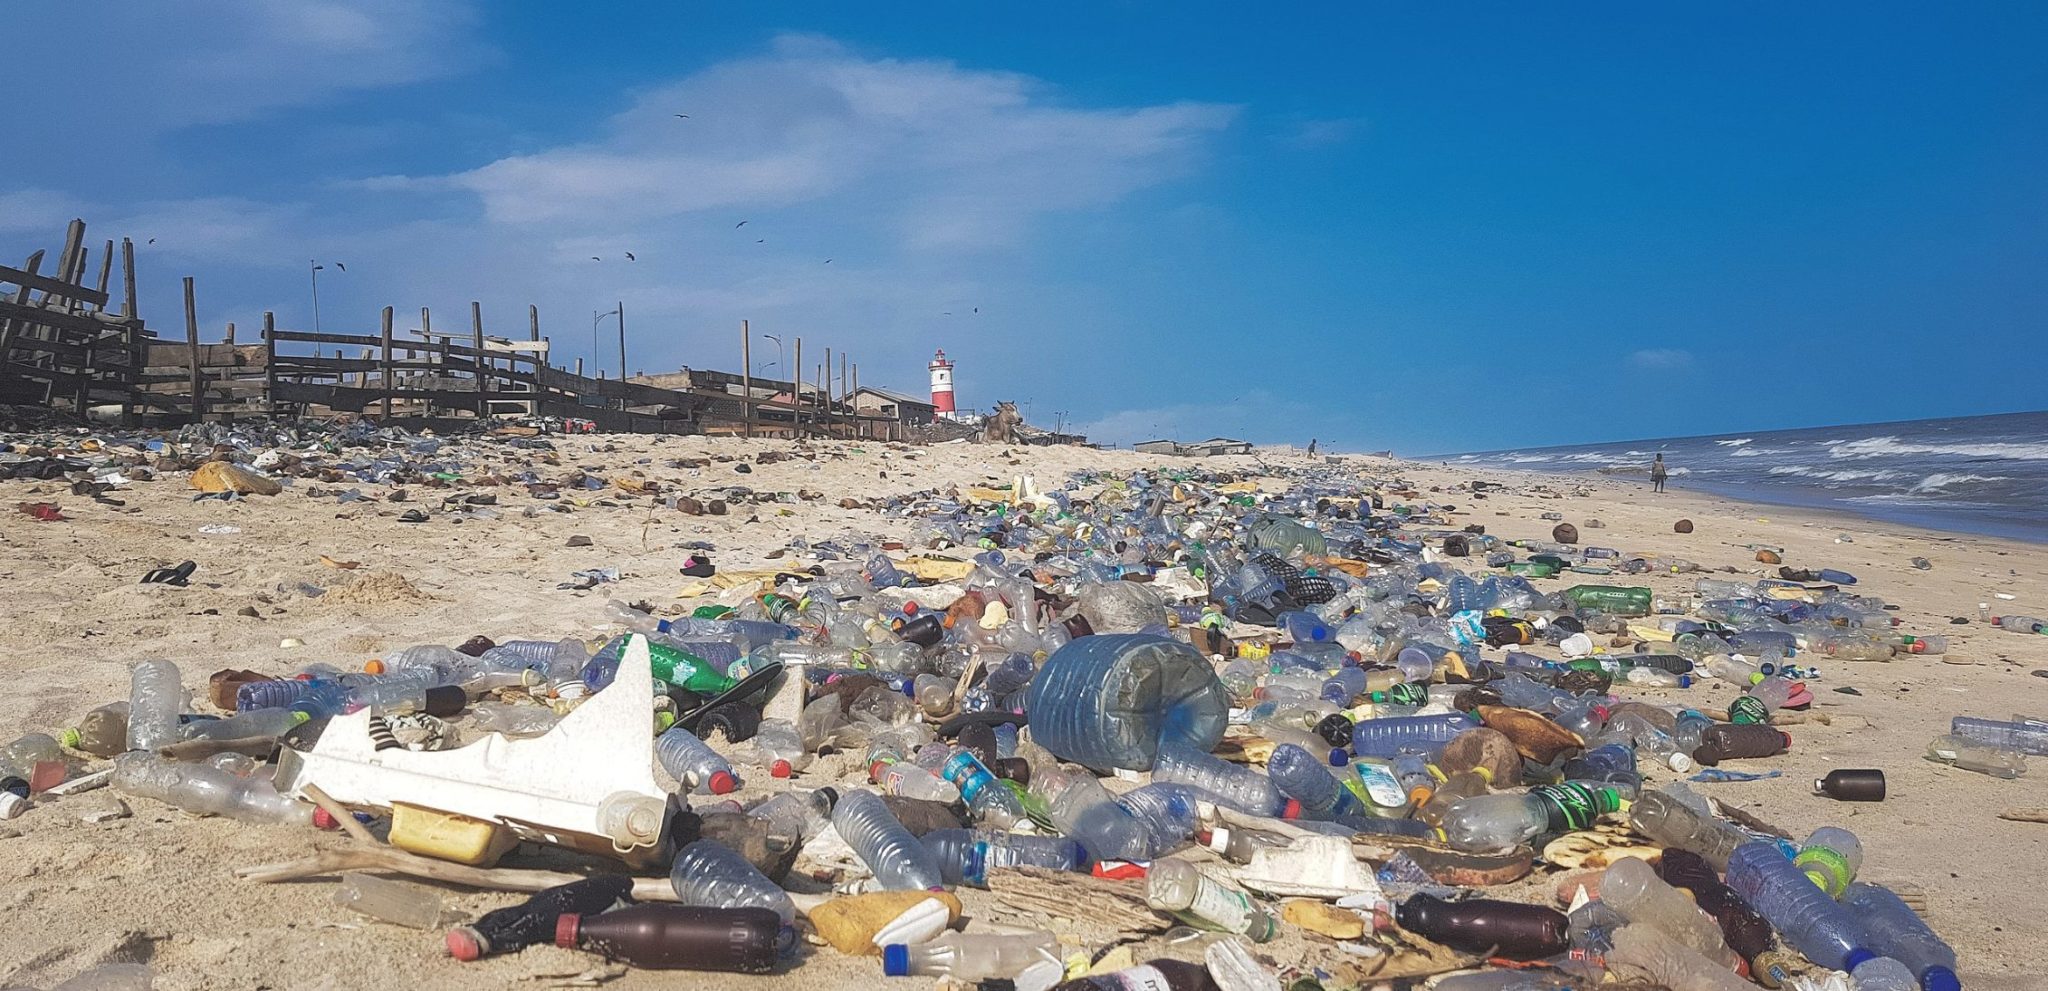 Zero Waste to reduce plastic pollution